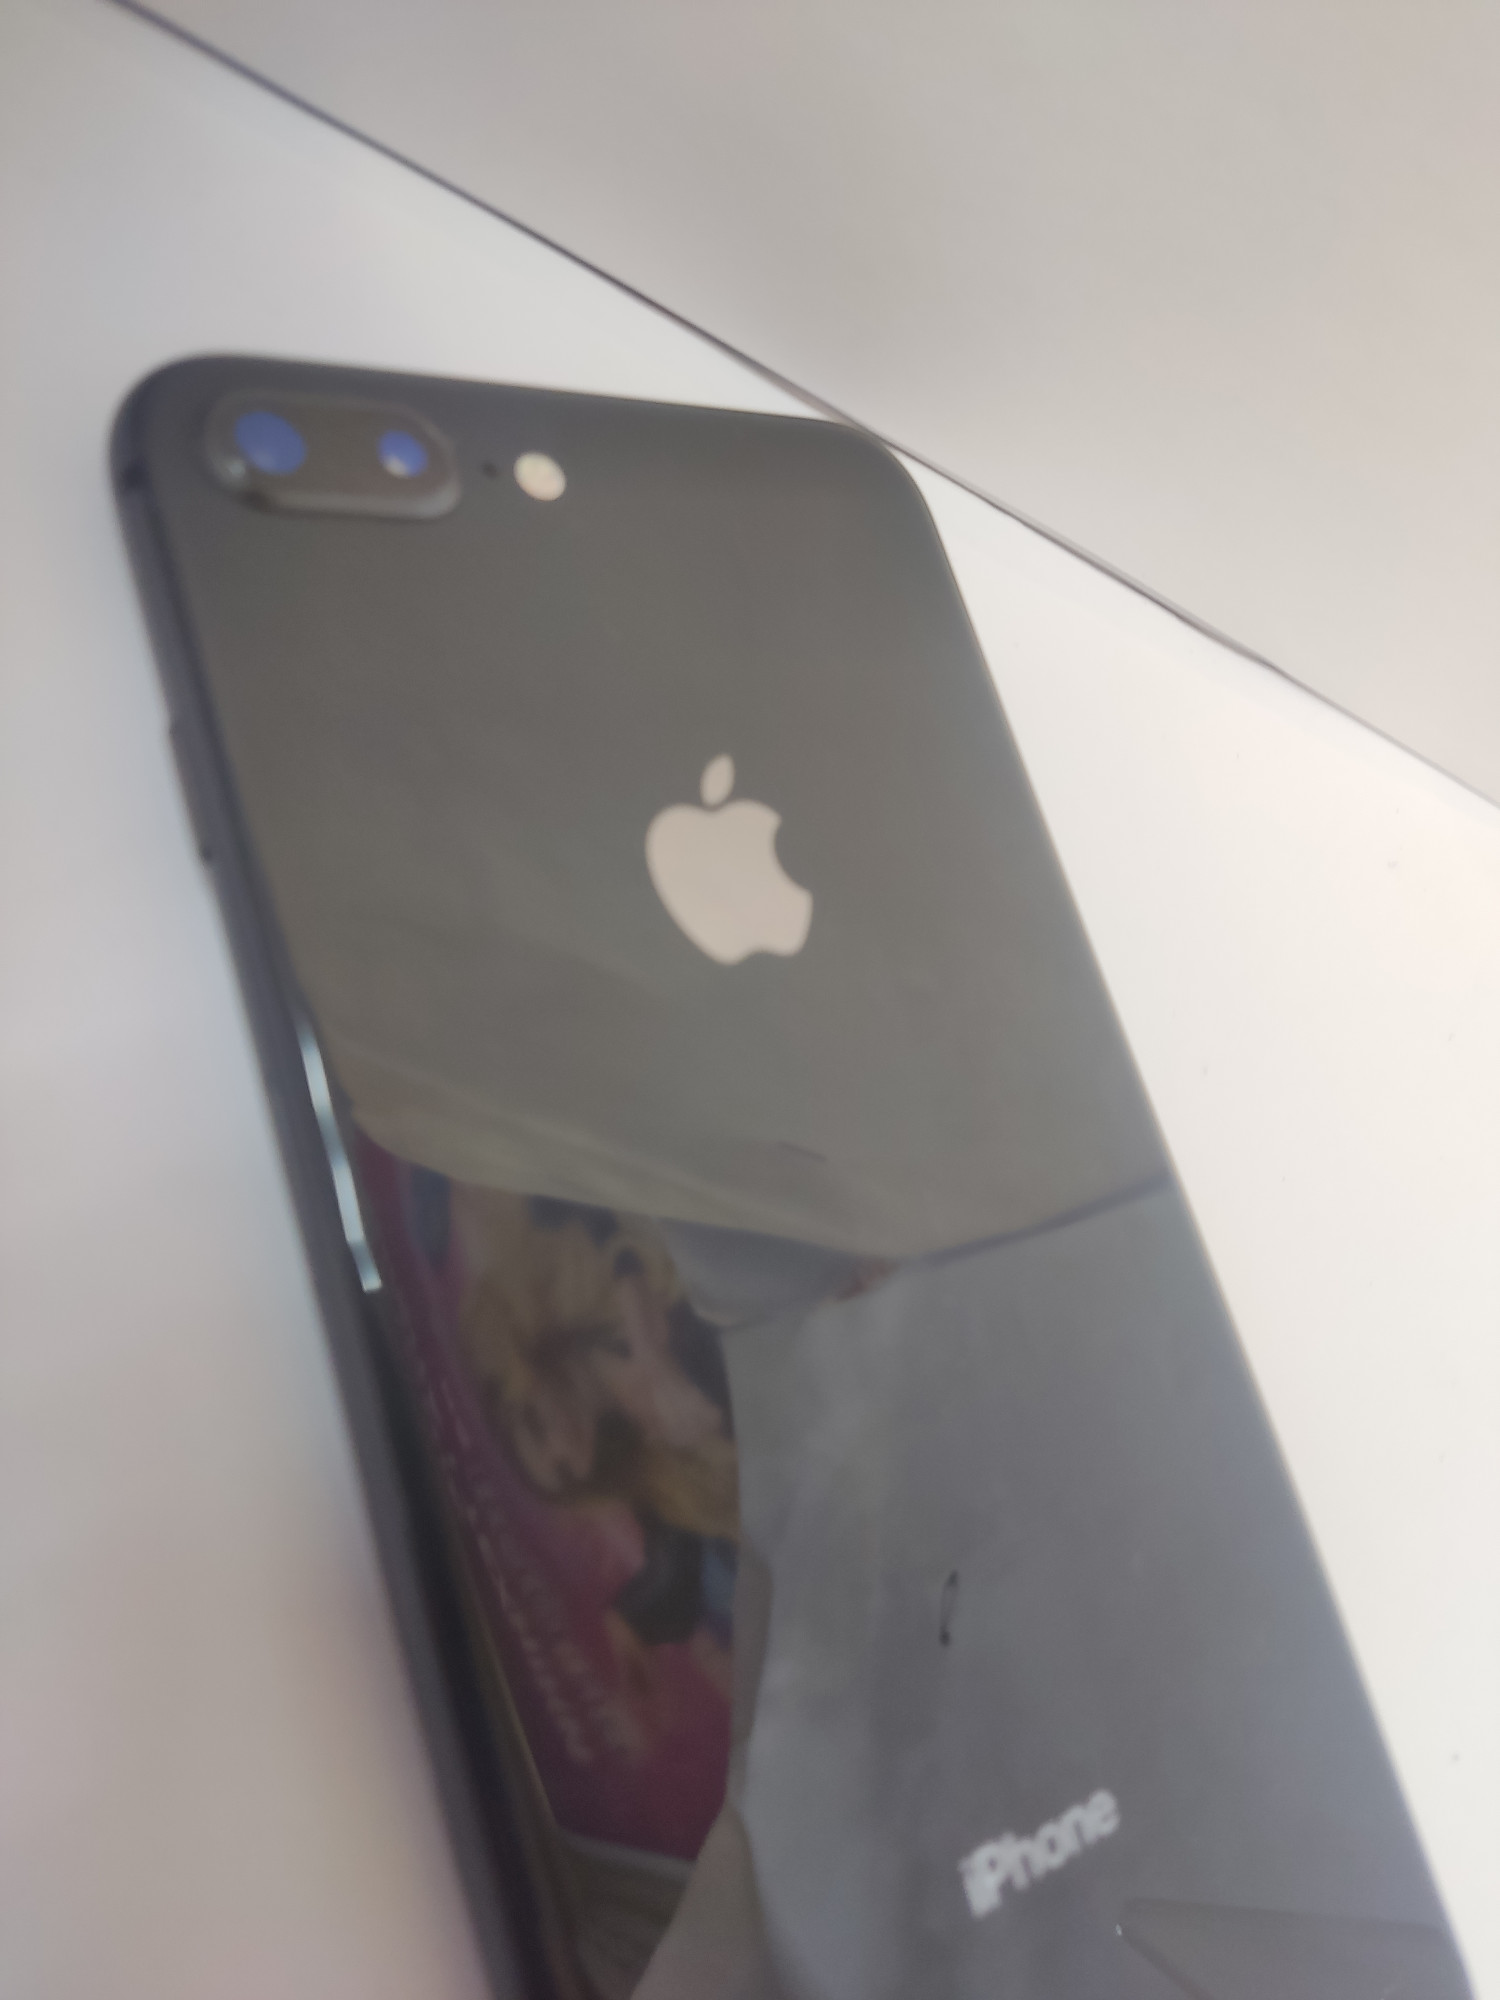 Apple iPhone 8 Plus 64Gb Space Gray (MQ8L2) 4